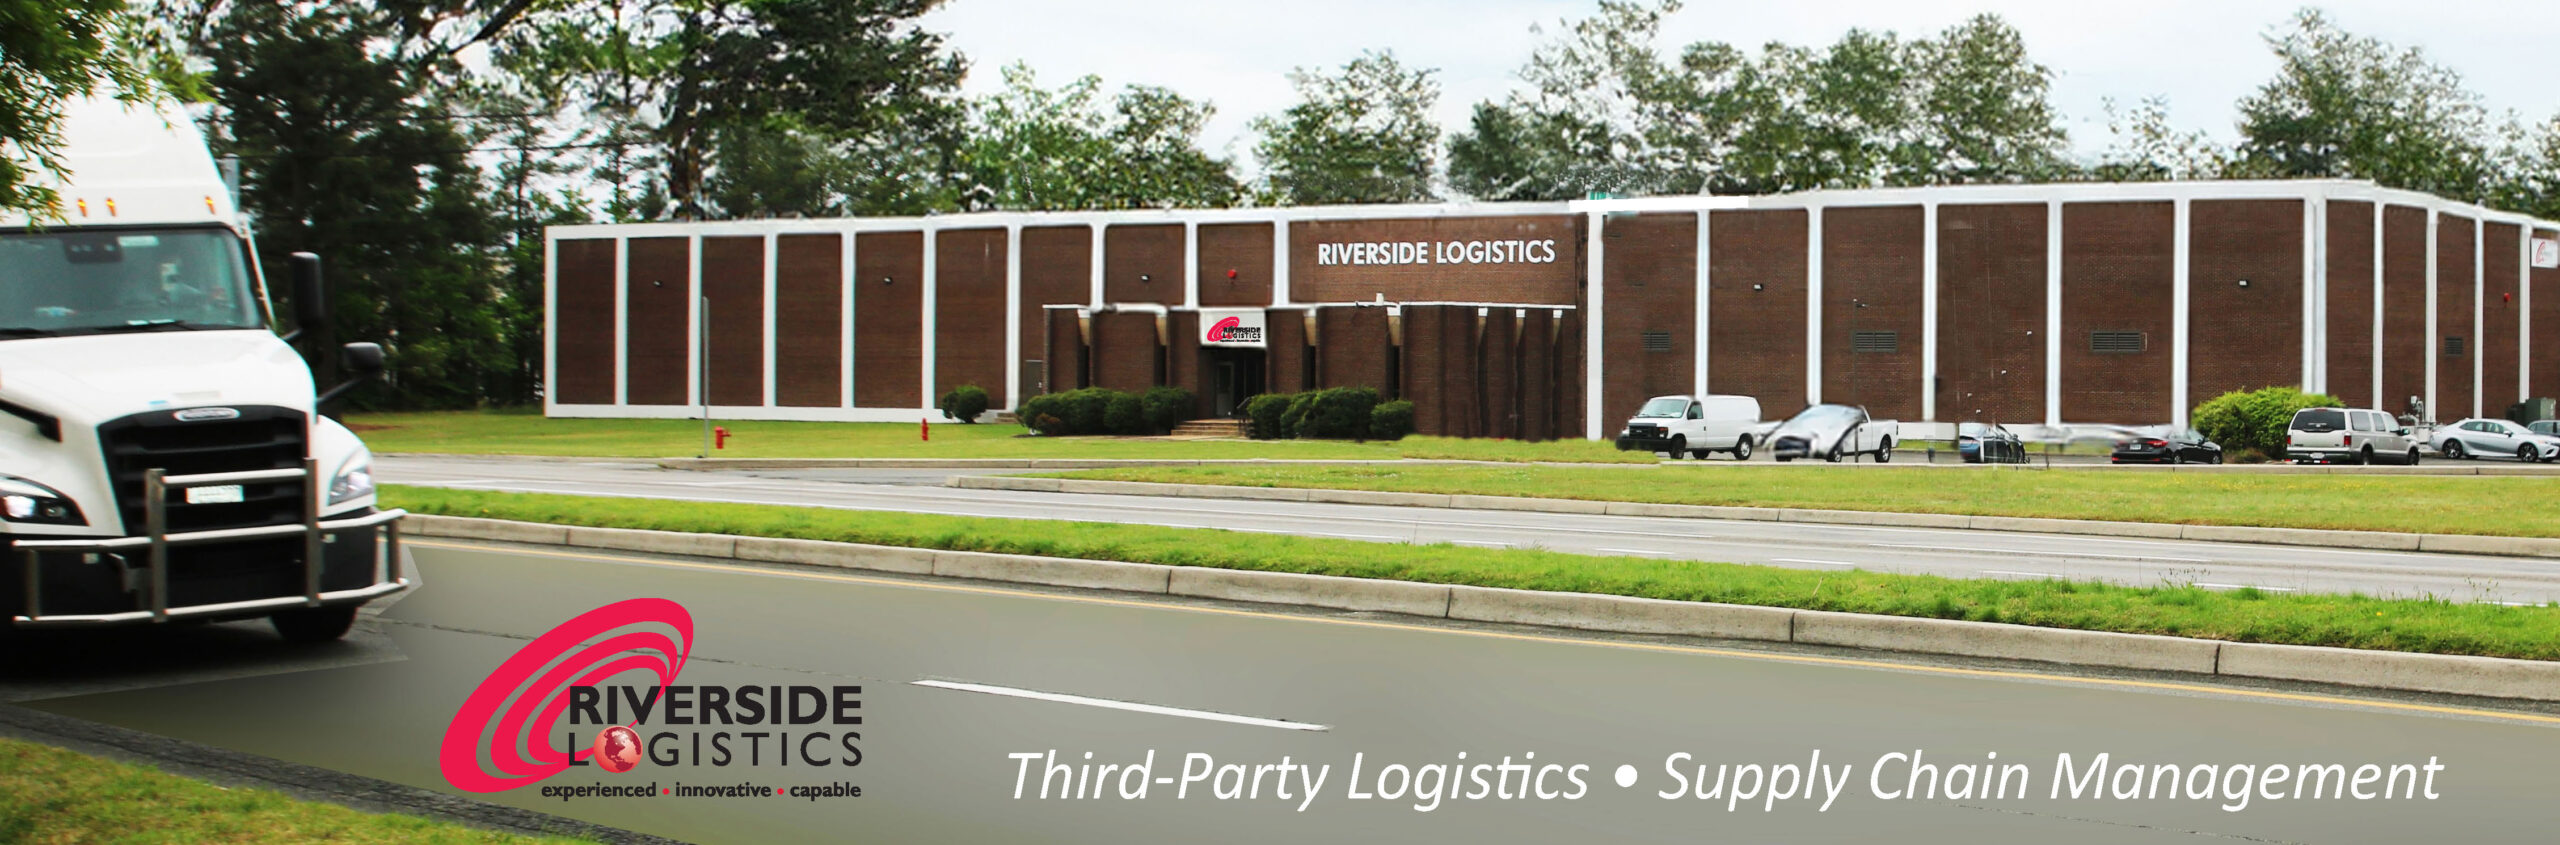 Riverside Logistics - A Third Party logistics company in Richmond, Virginia